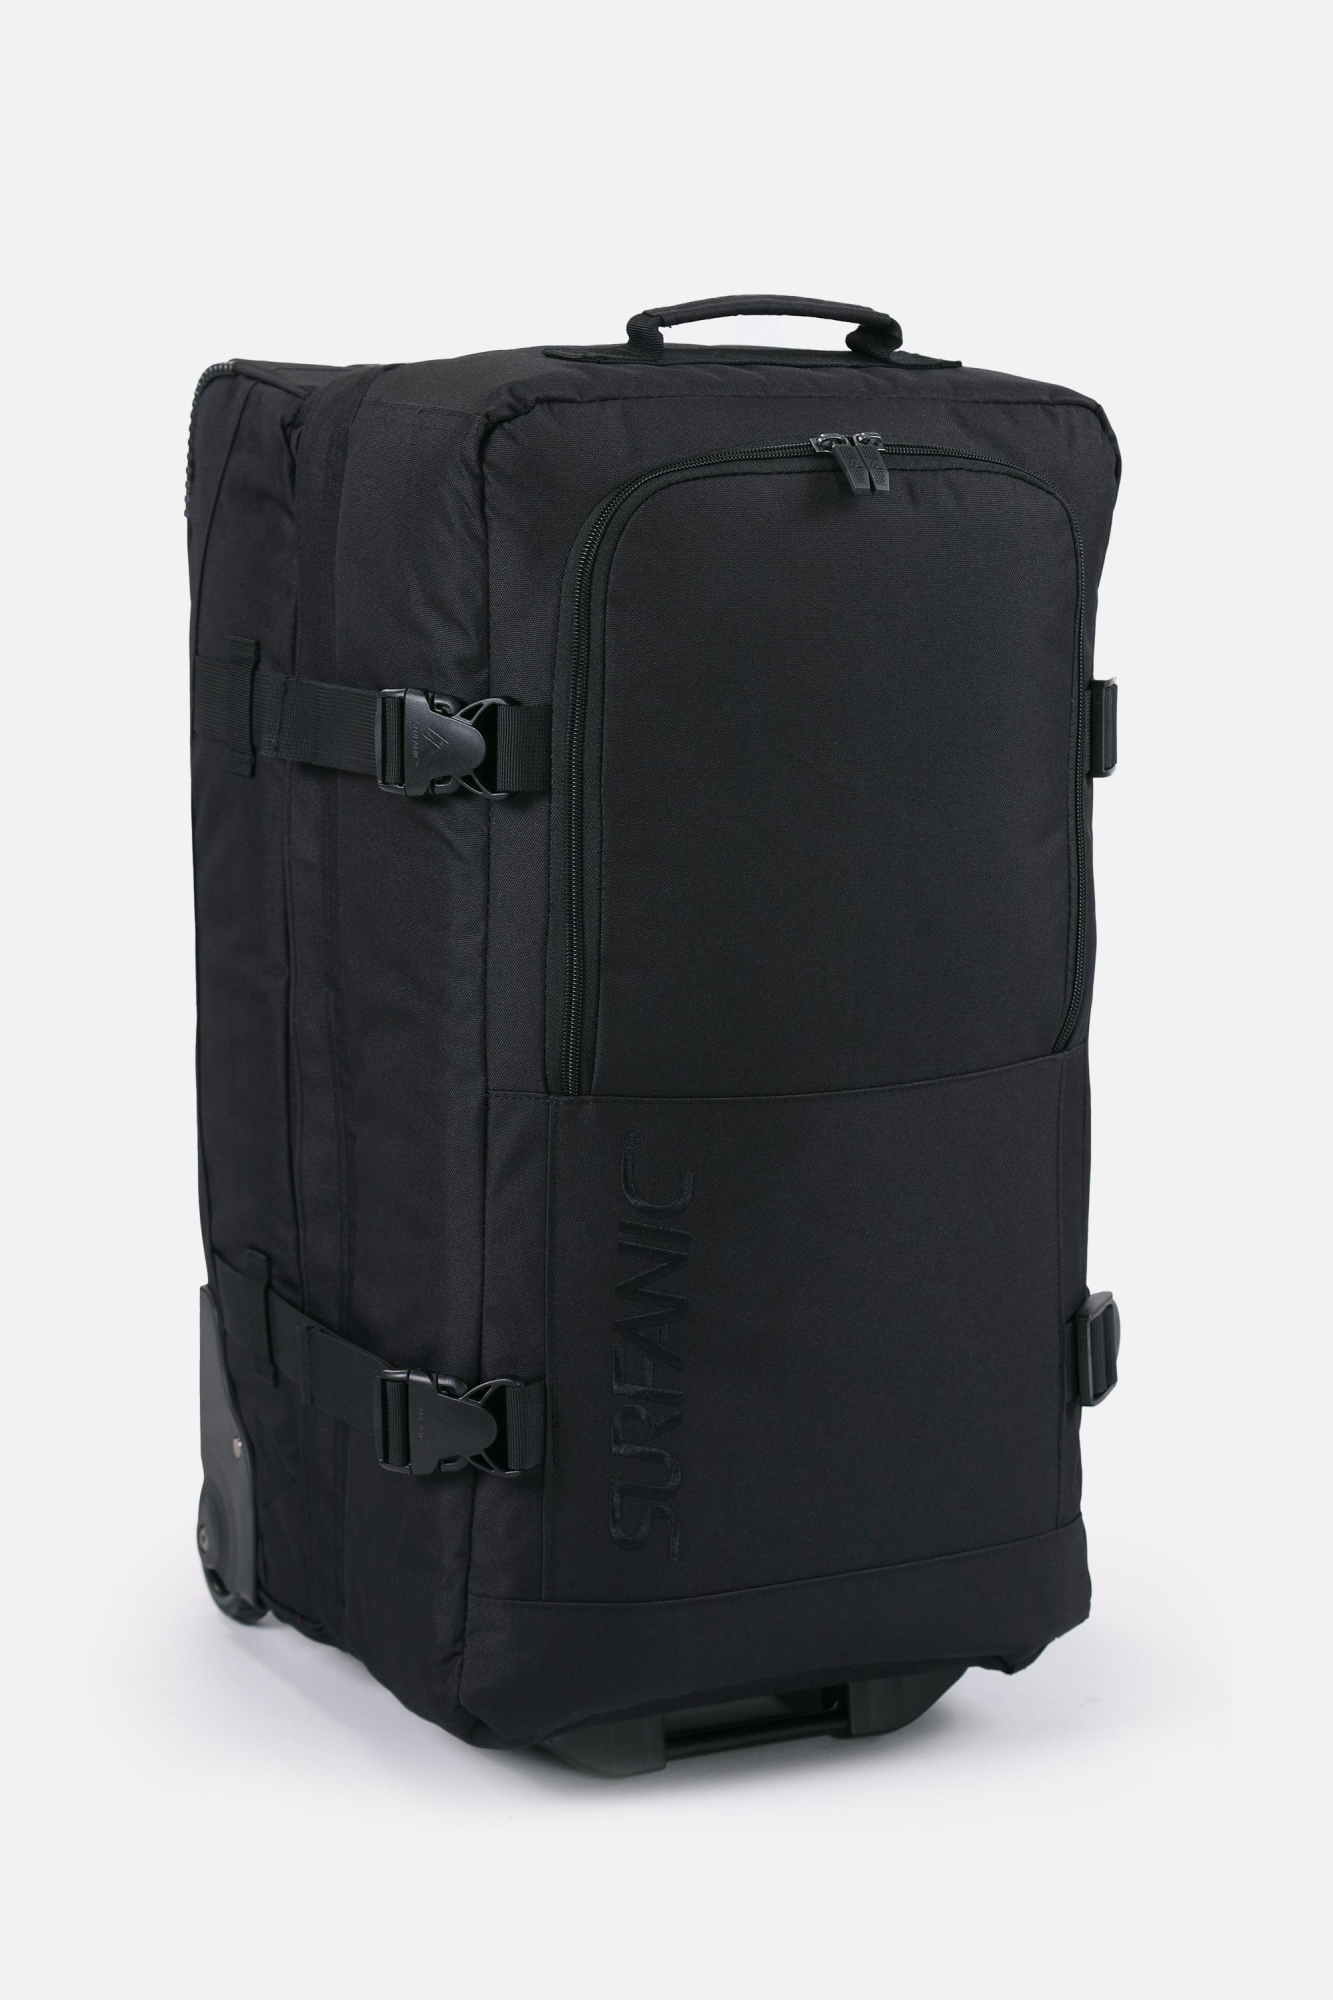 Surfanic Unisex Maxim 70 Roller Bag Black - Size: 70 Litre